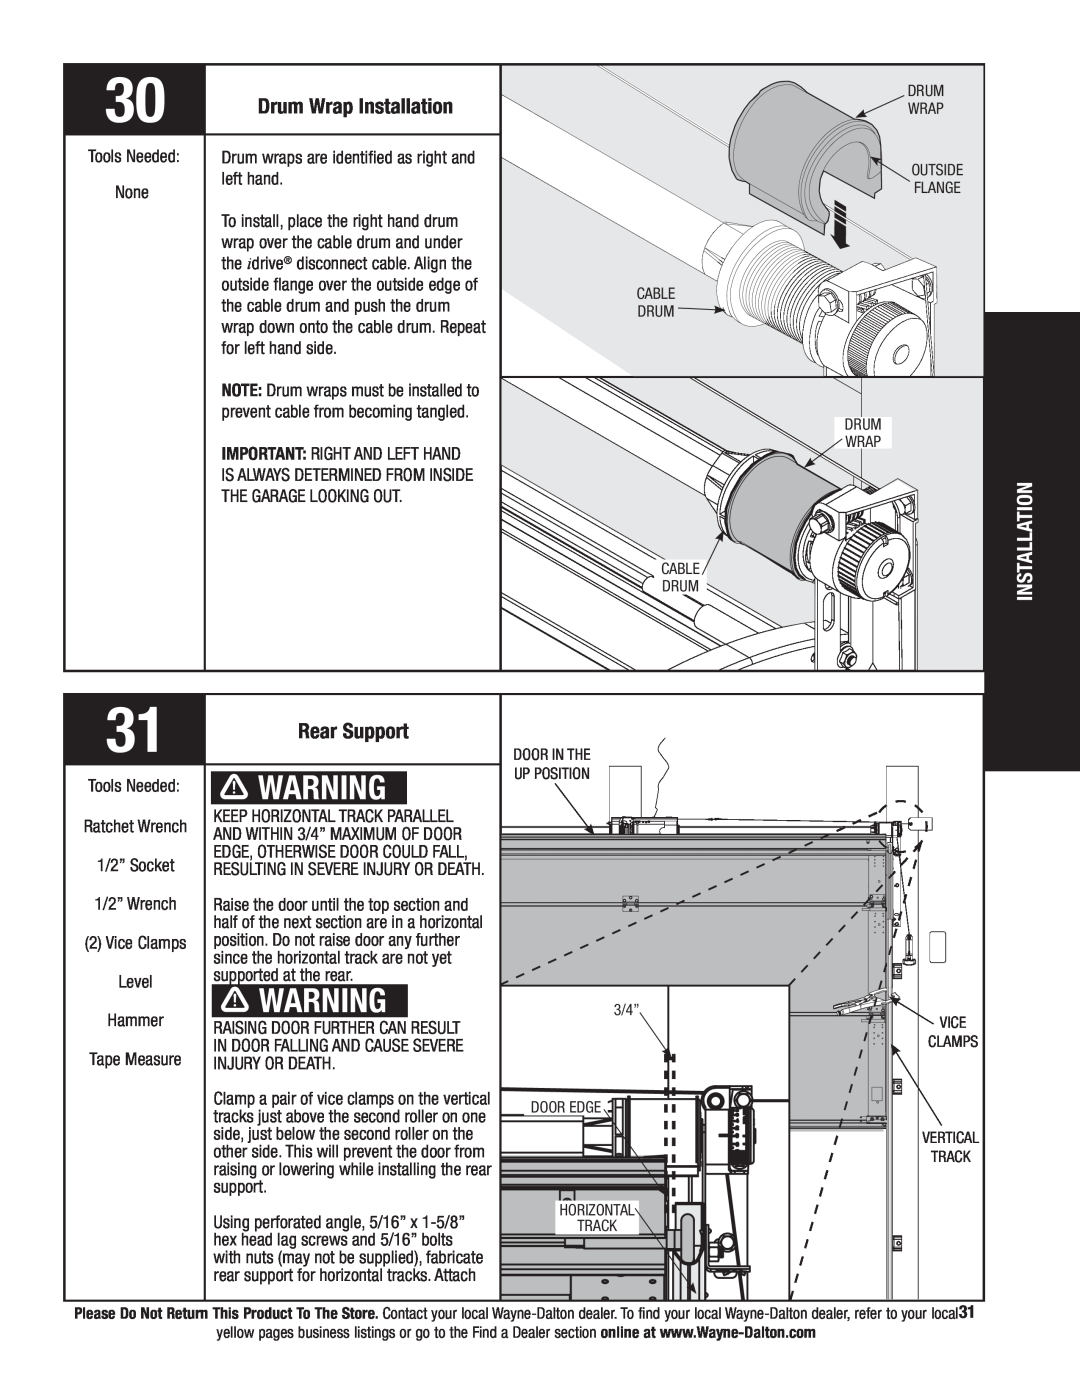 Wayne-Dalton 9800 installation instructions Drum Wrap Installation, Rear Support 